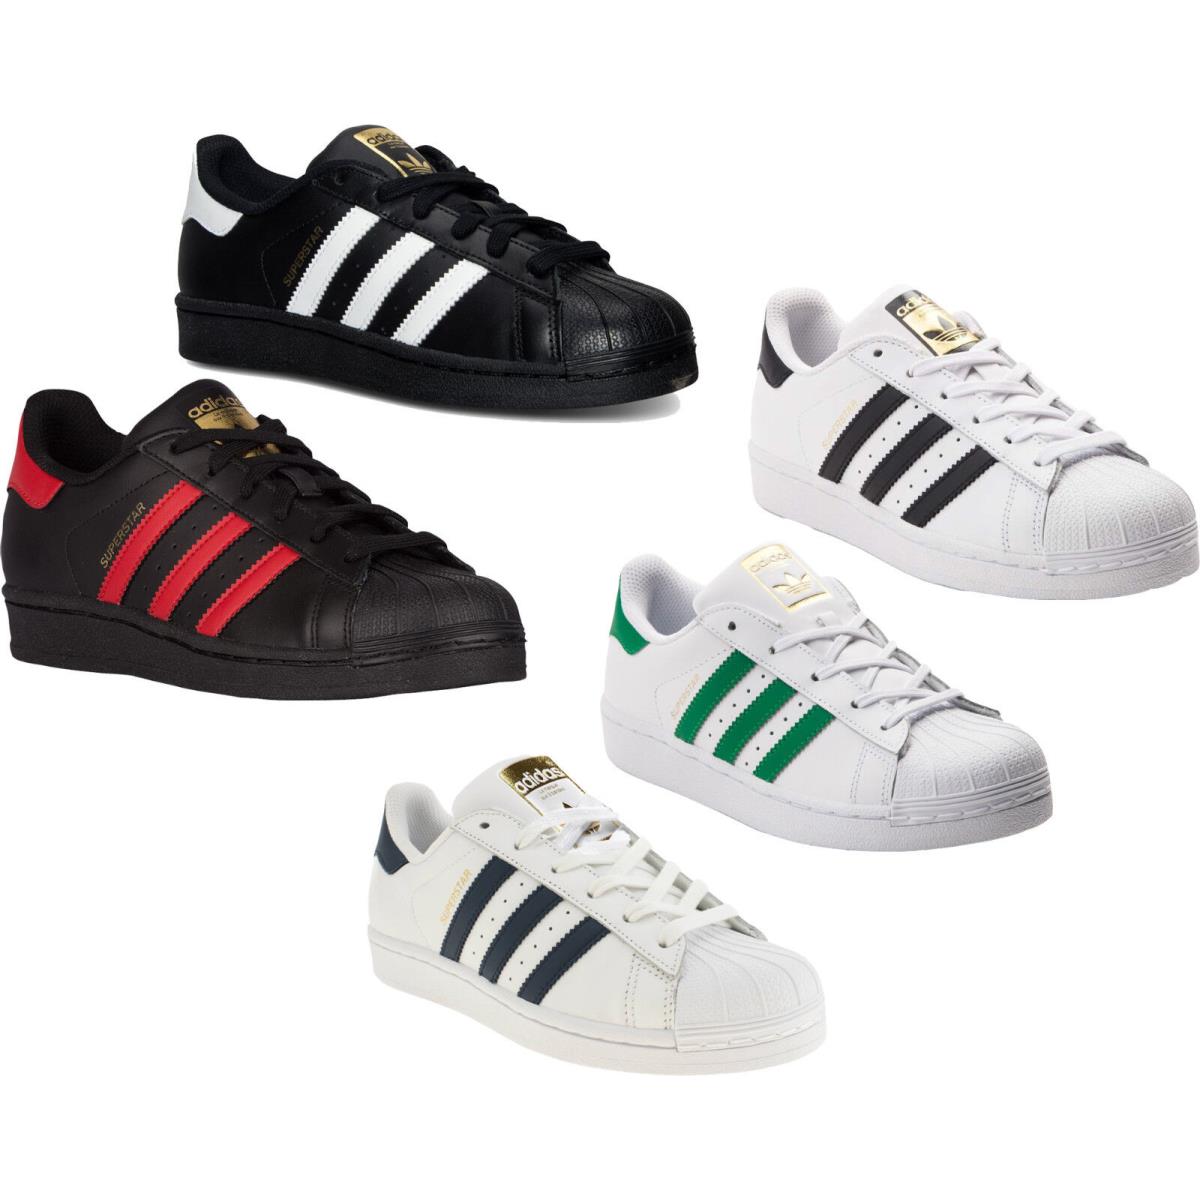 Adidas Originals Superstar J Shoes Kids Sneakers White Black - Black, White